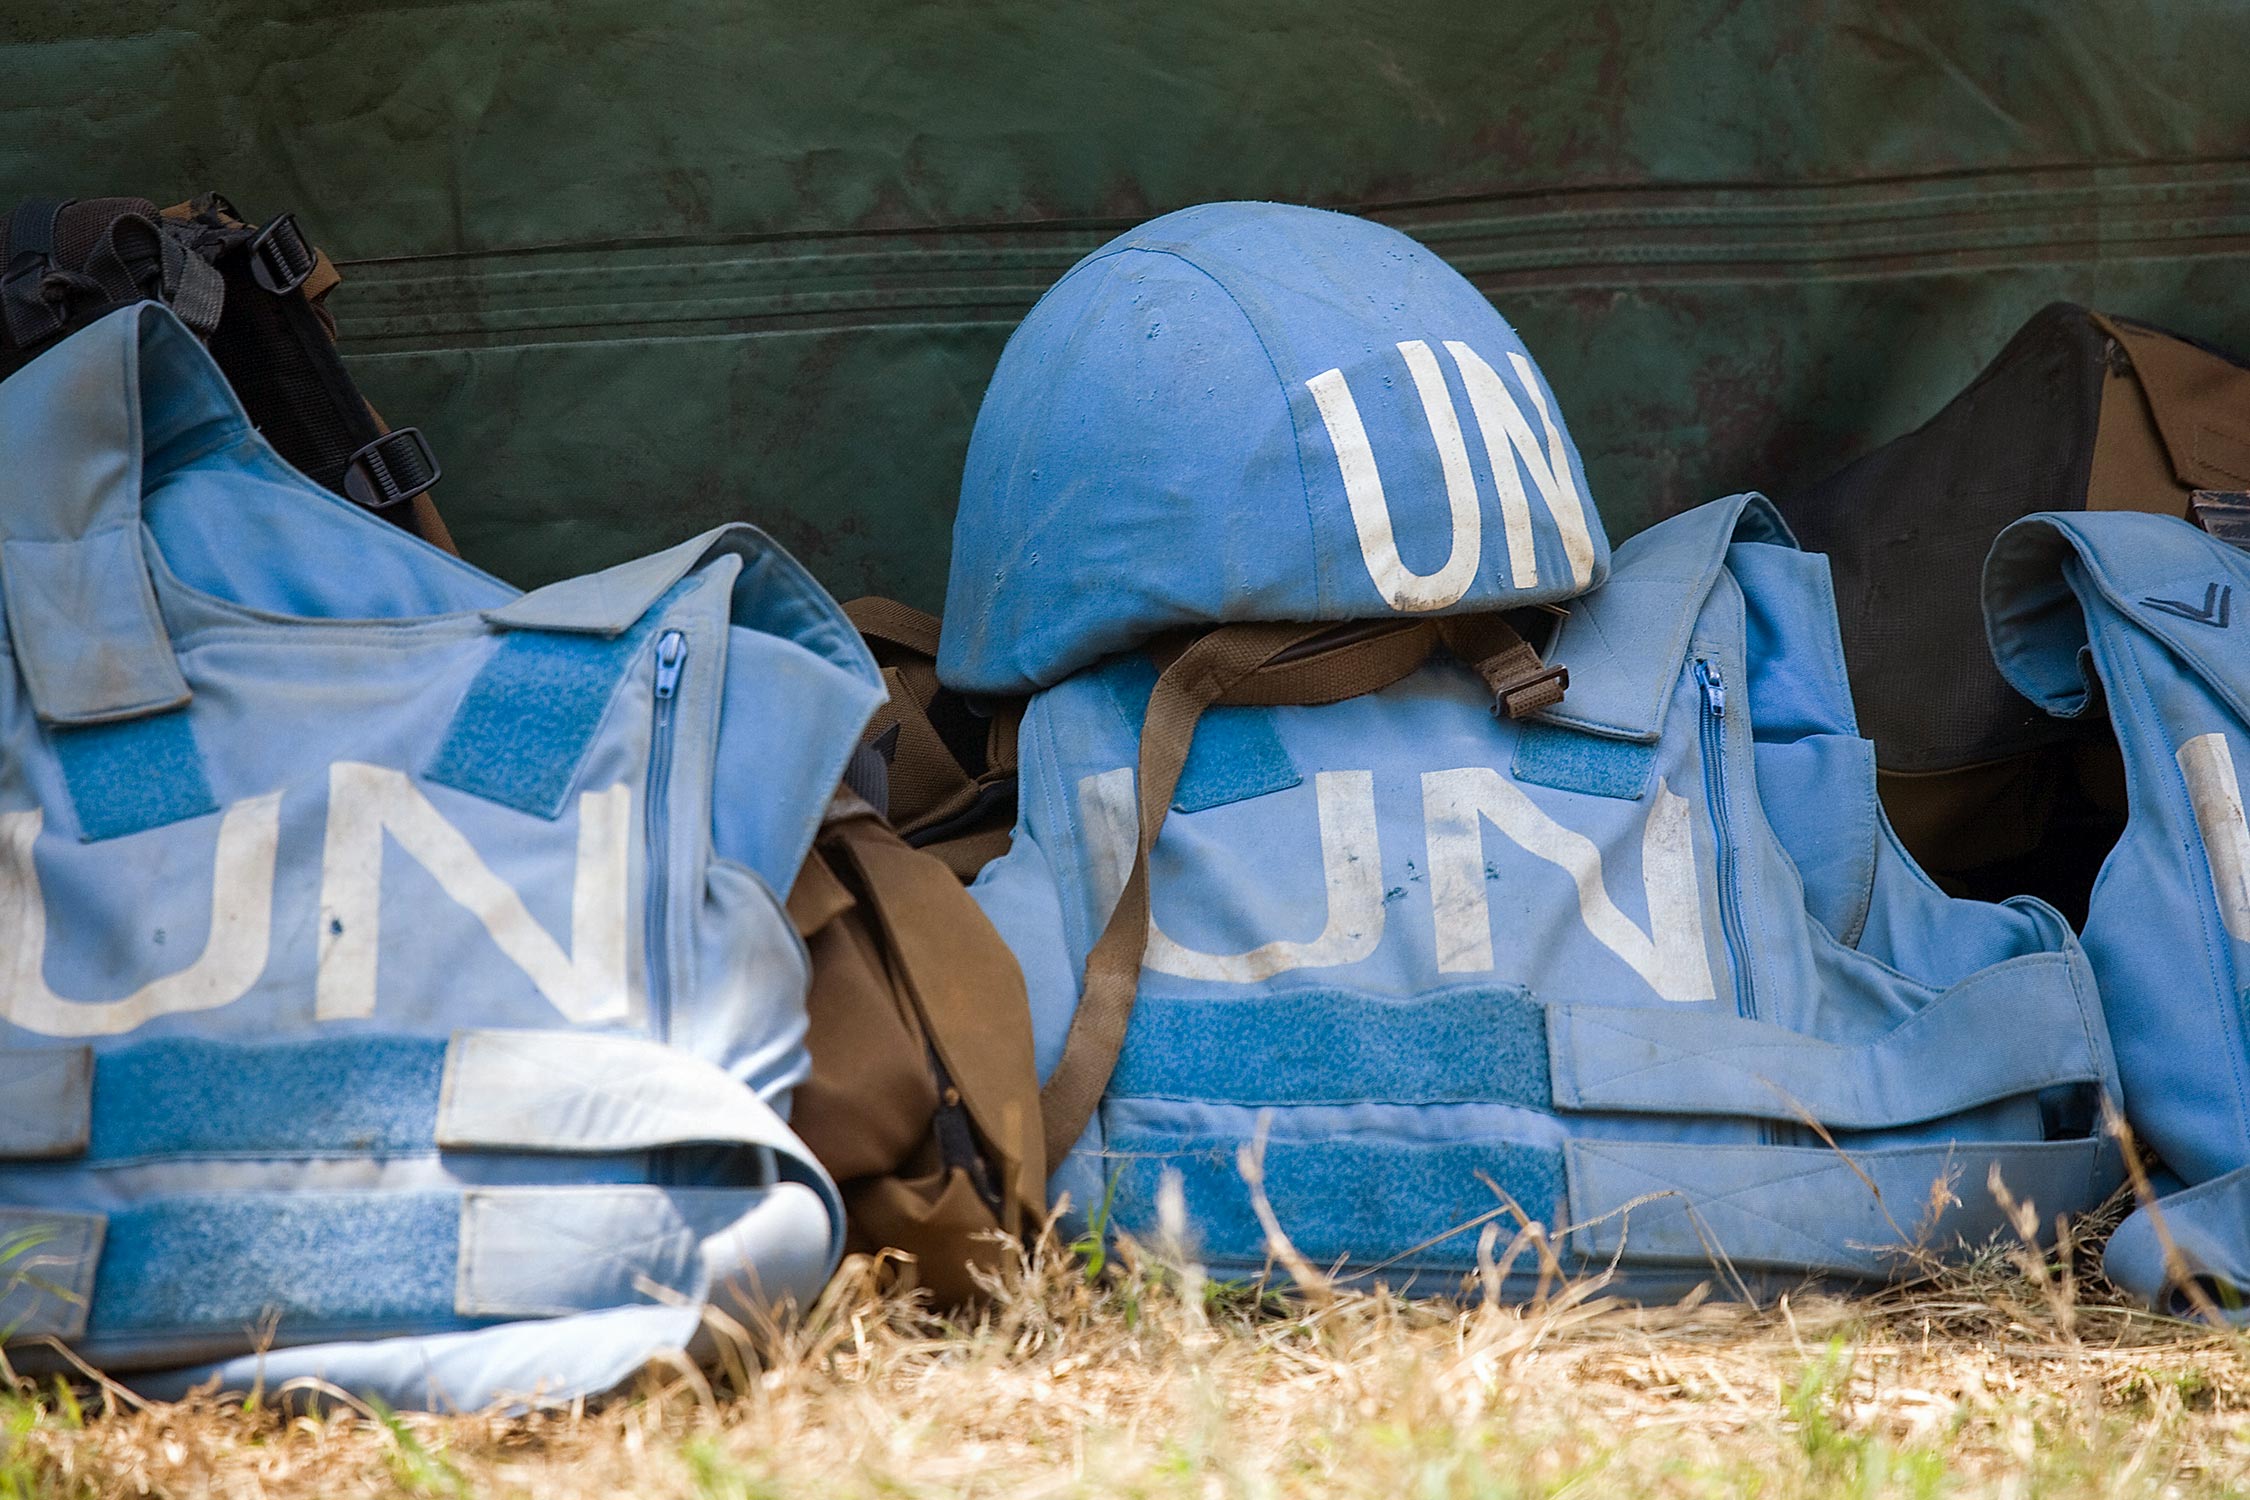 UN peacekeepers helmet and flak jackets